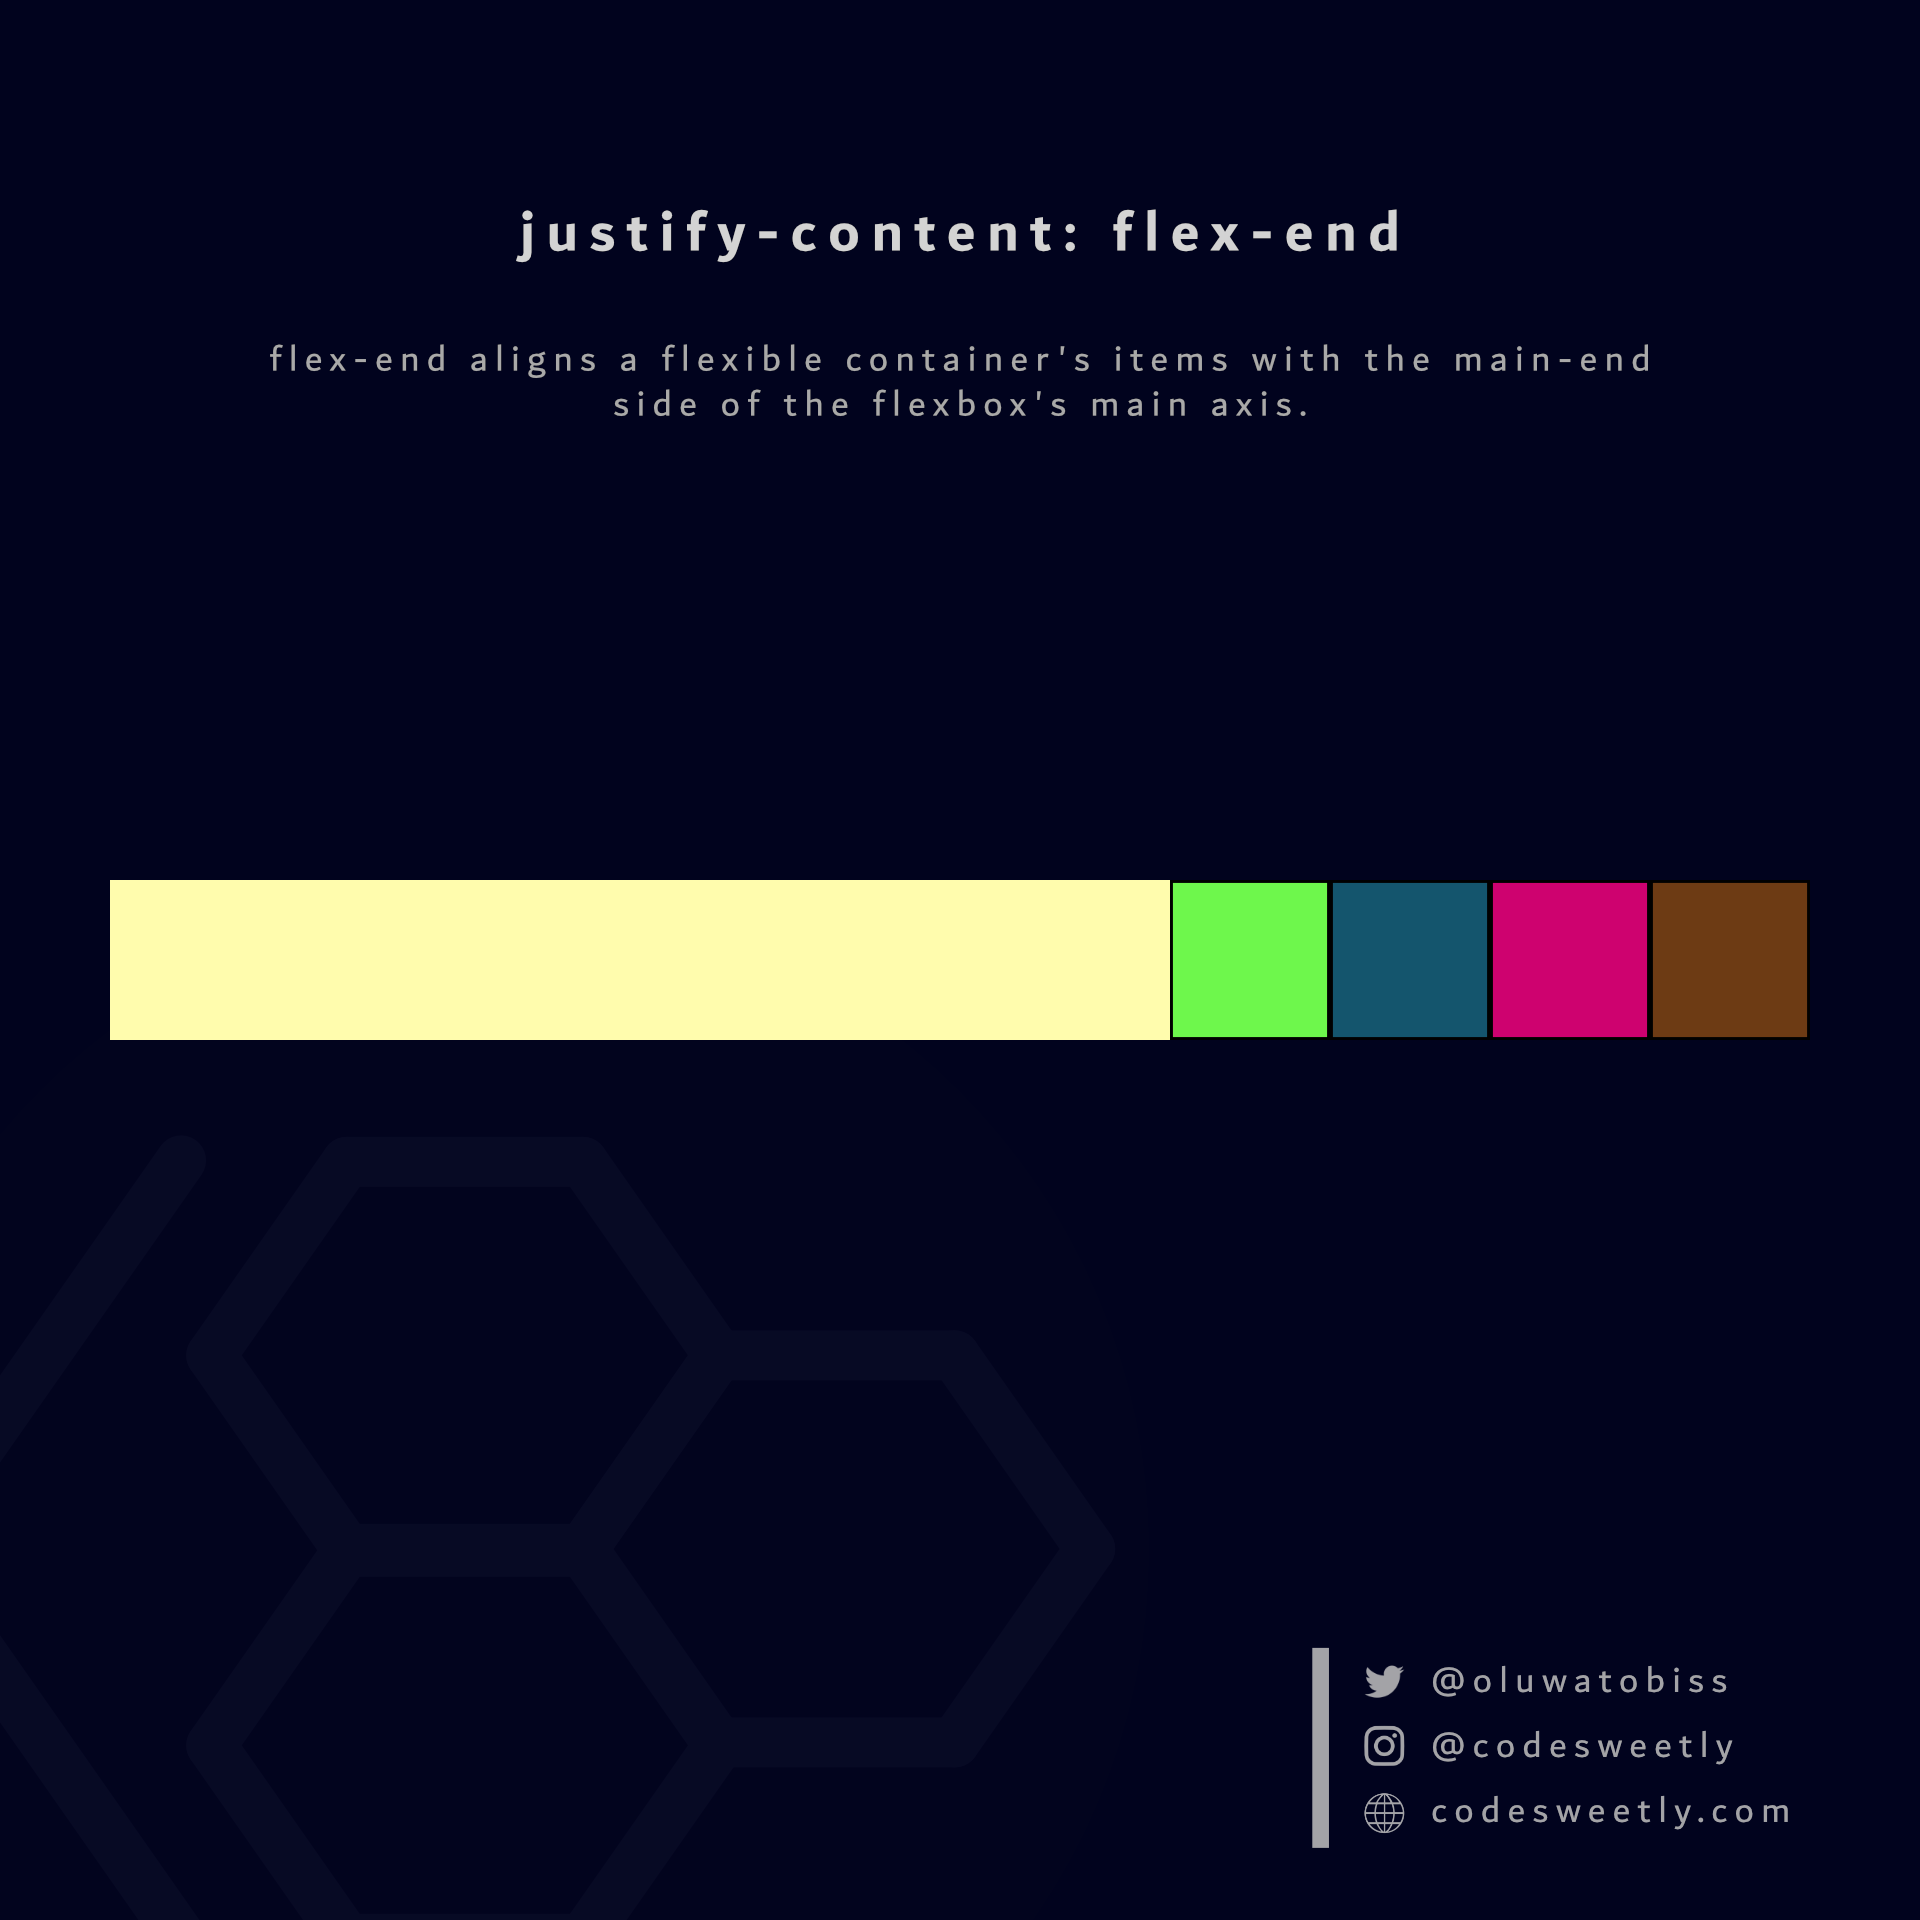 Illustration of justify-content's flex-end value